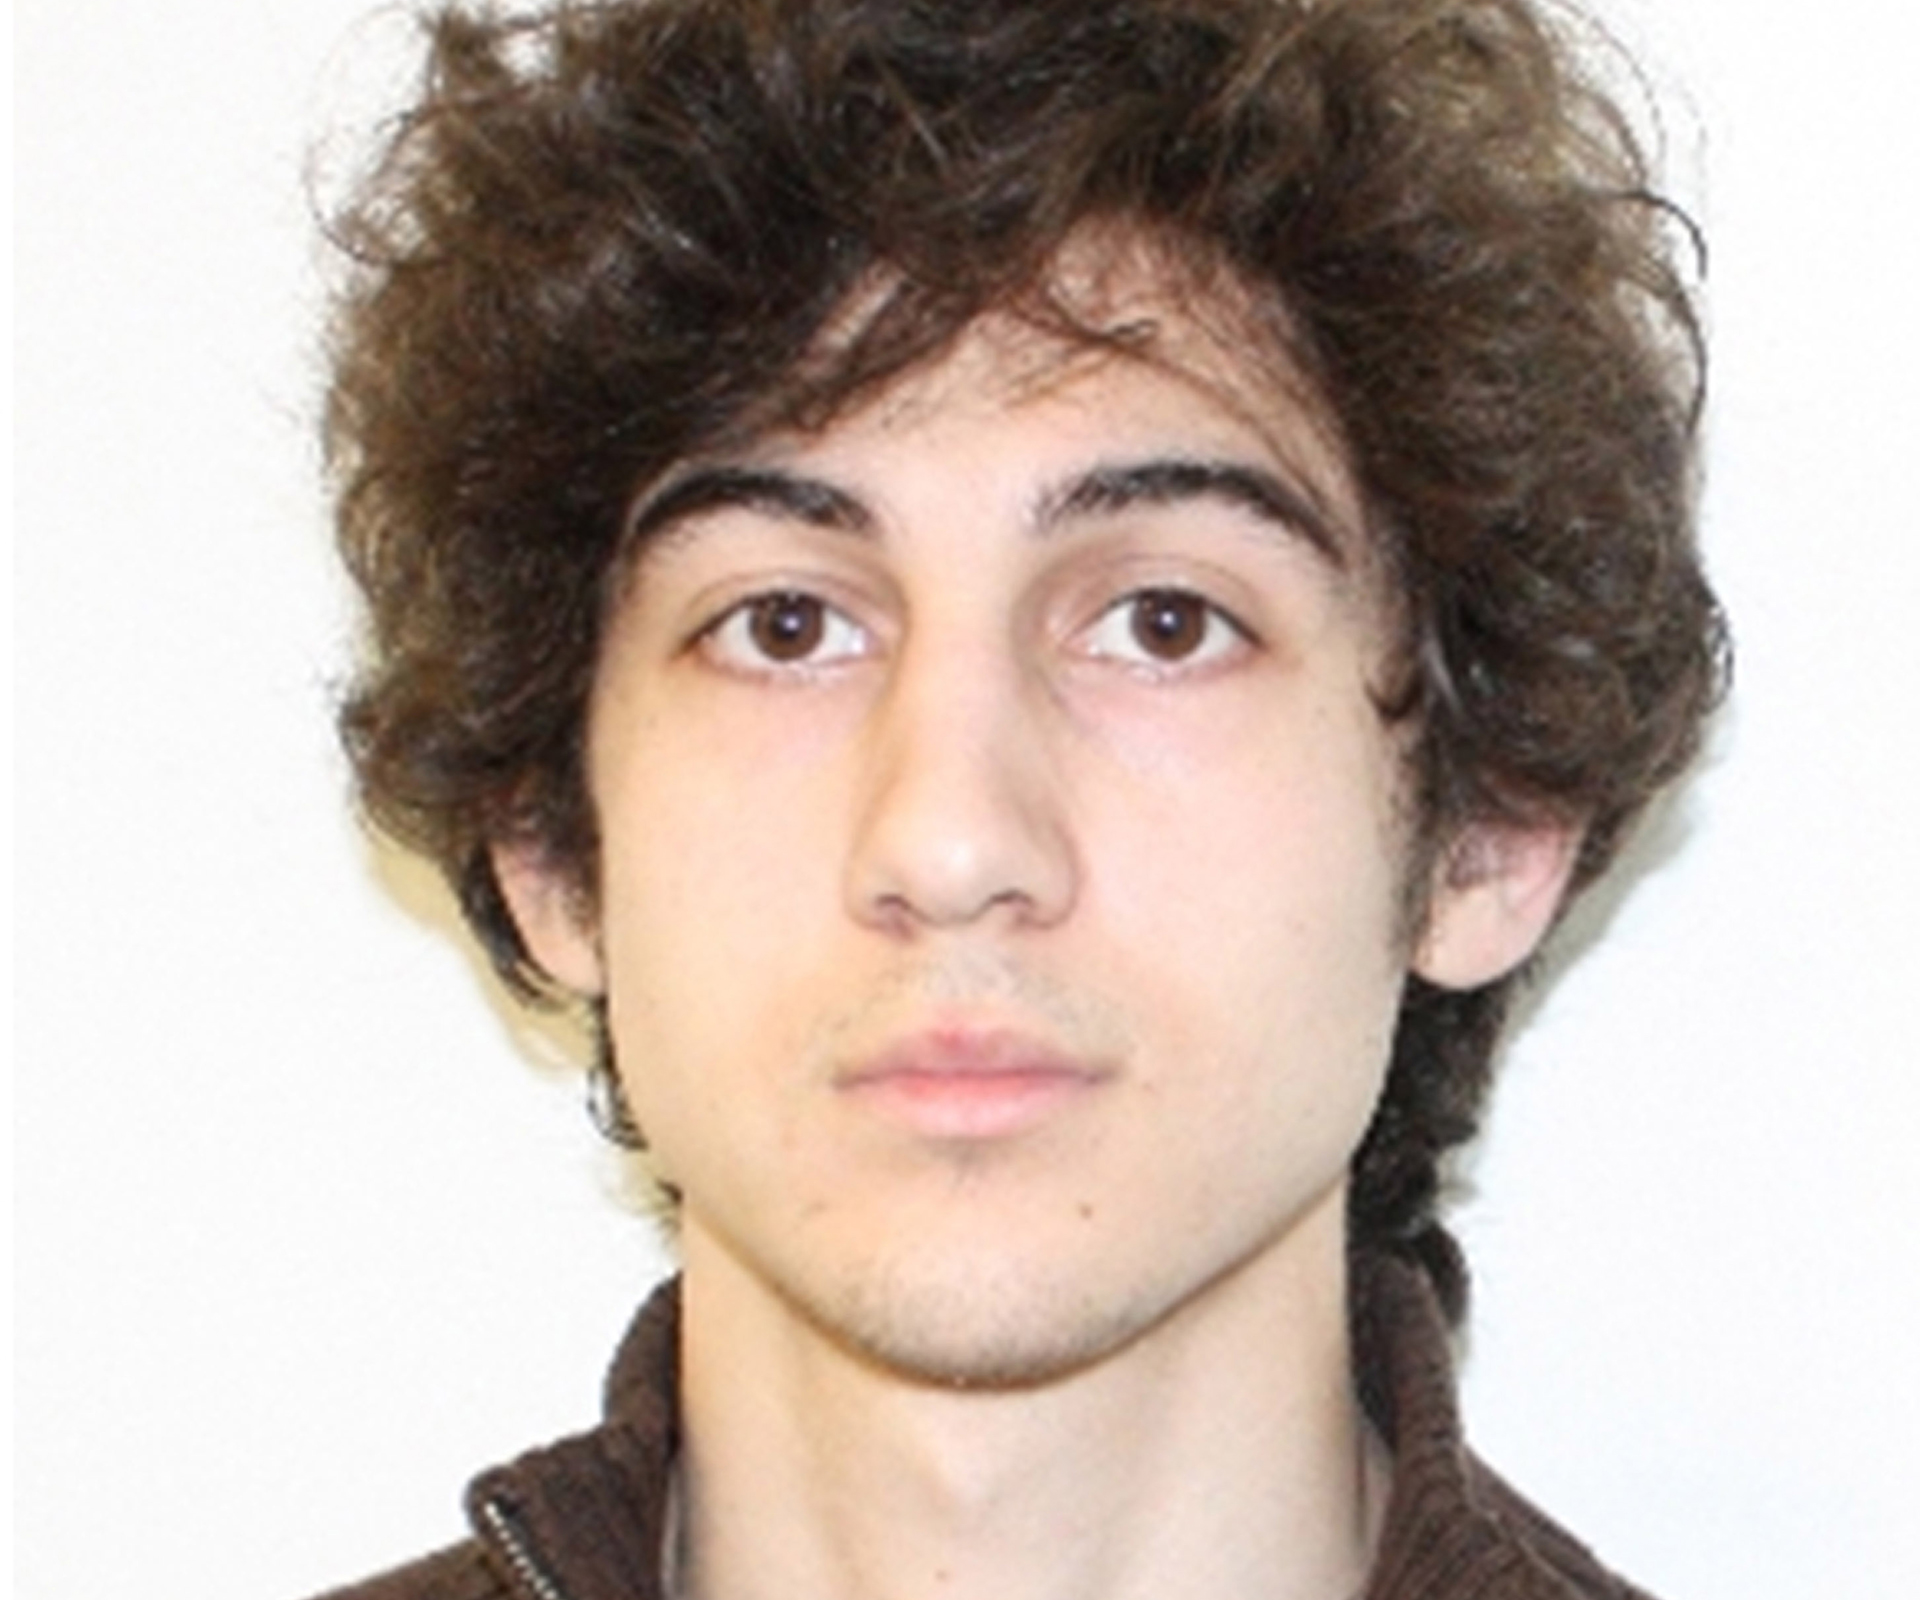 Boston bomber: “I am sorry for the lives I have taken”